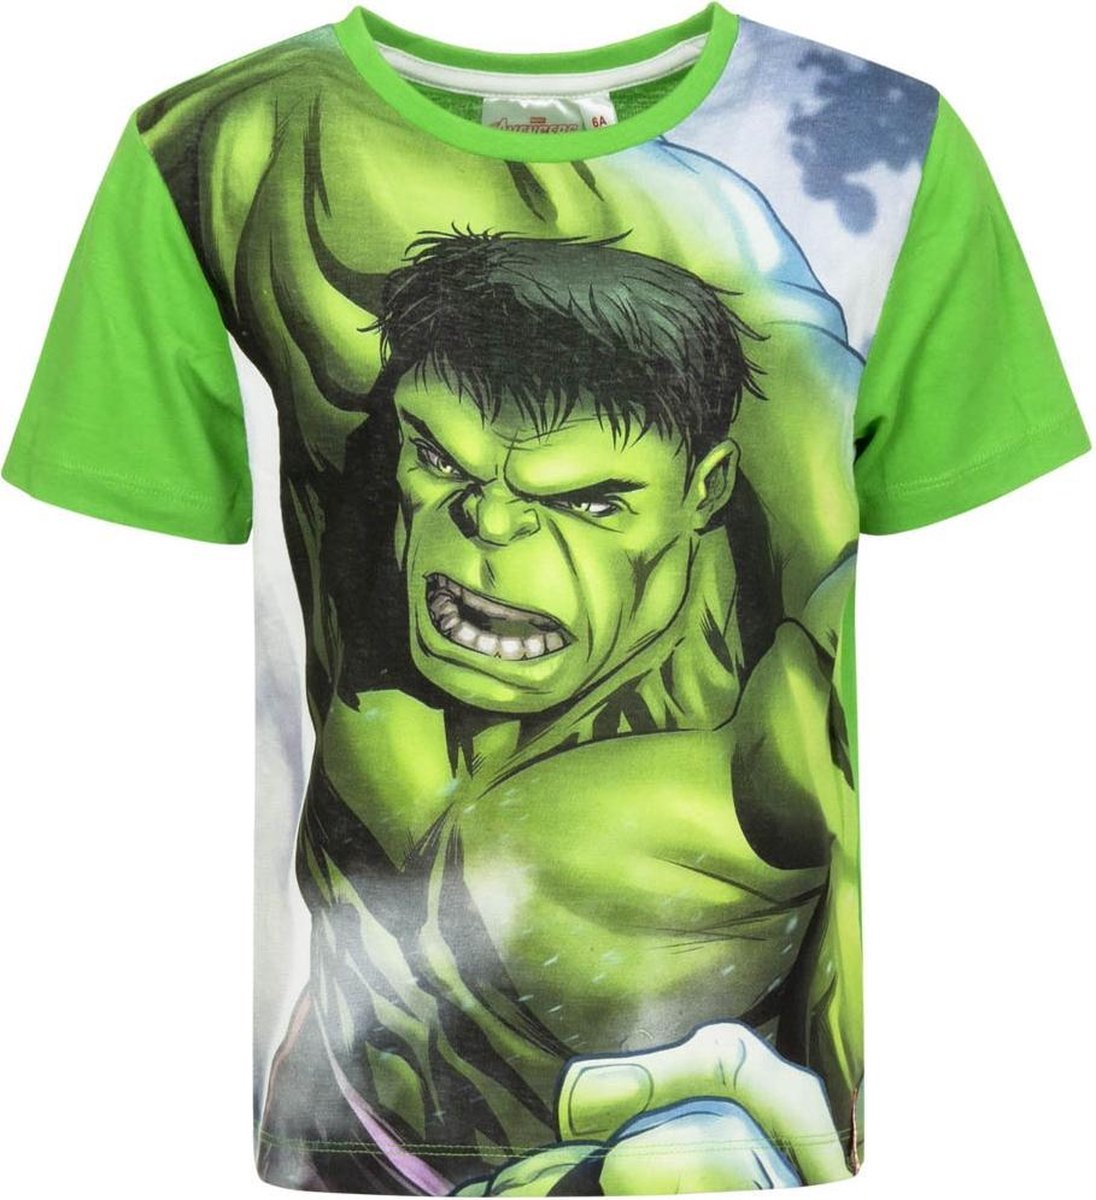 T-shirt van Avengers de Hulk maat 104 | bol.com